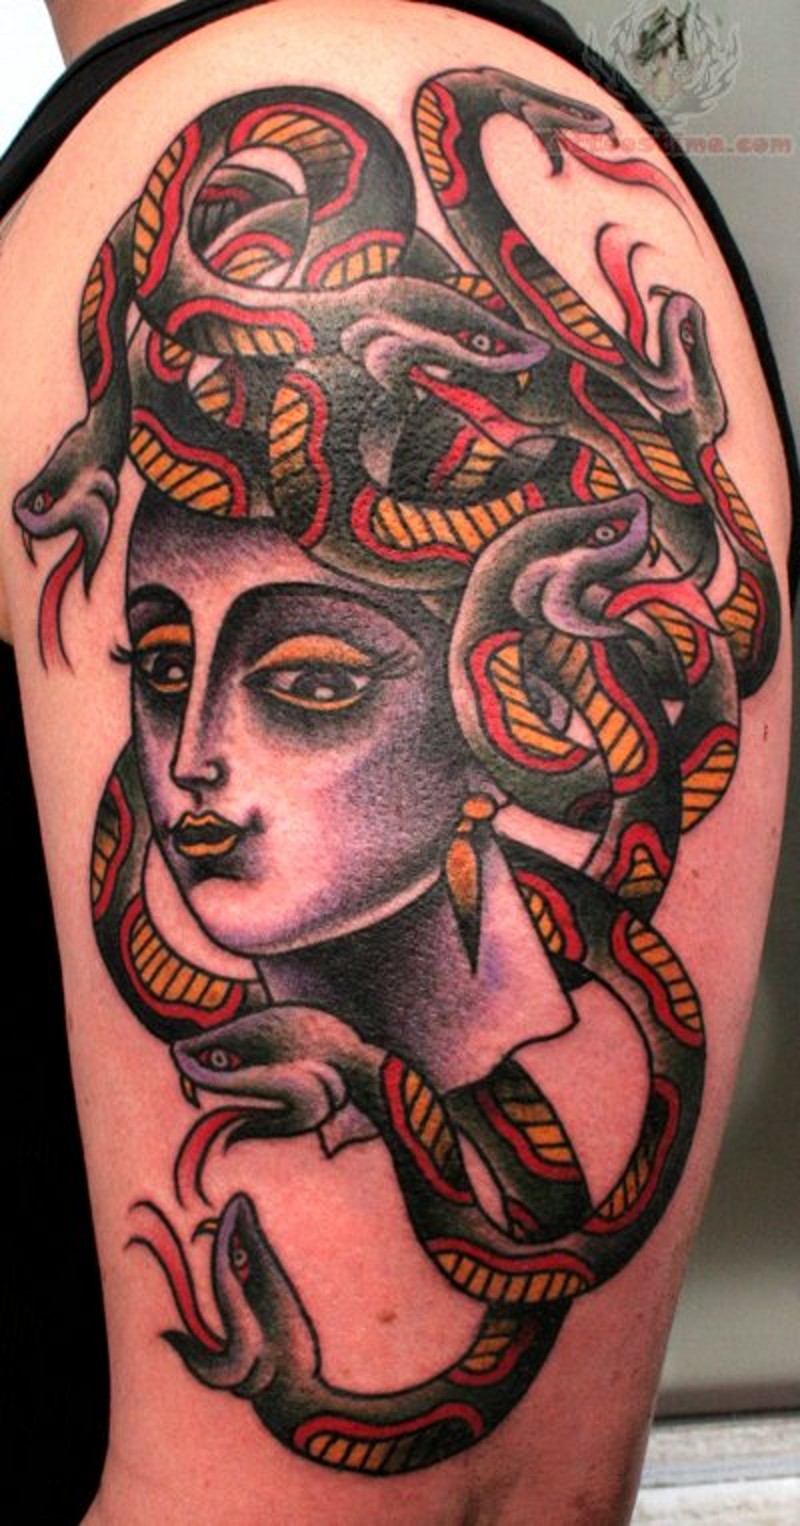 Mystique colored Gorgon Medusa shoulder tattoo in original old school style